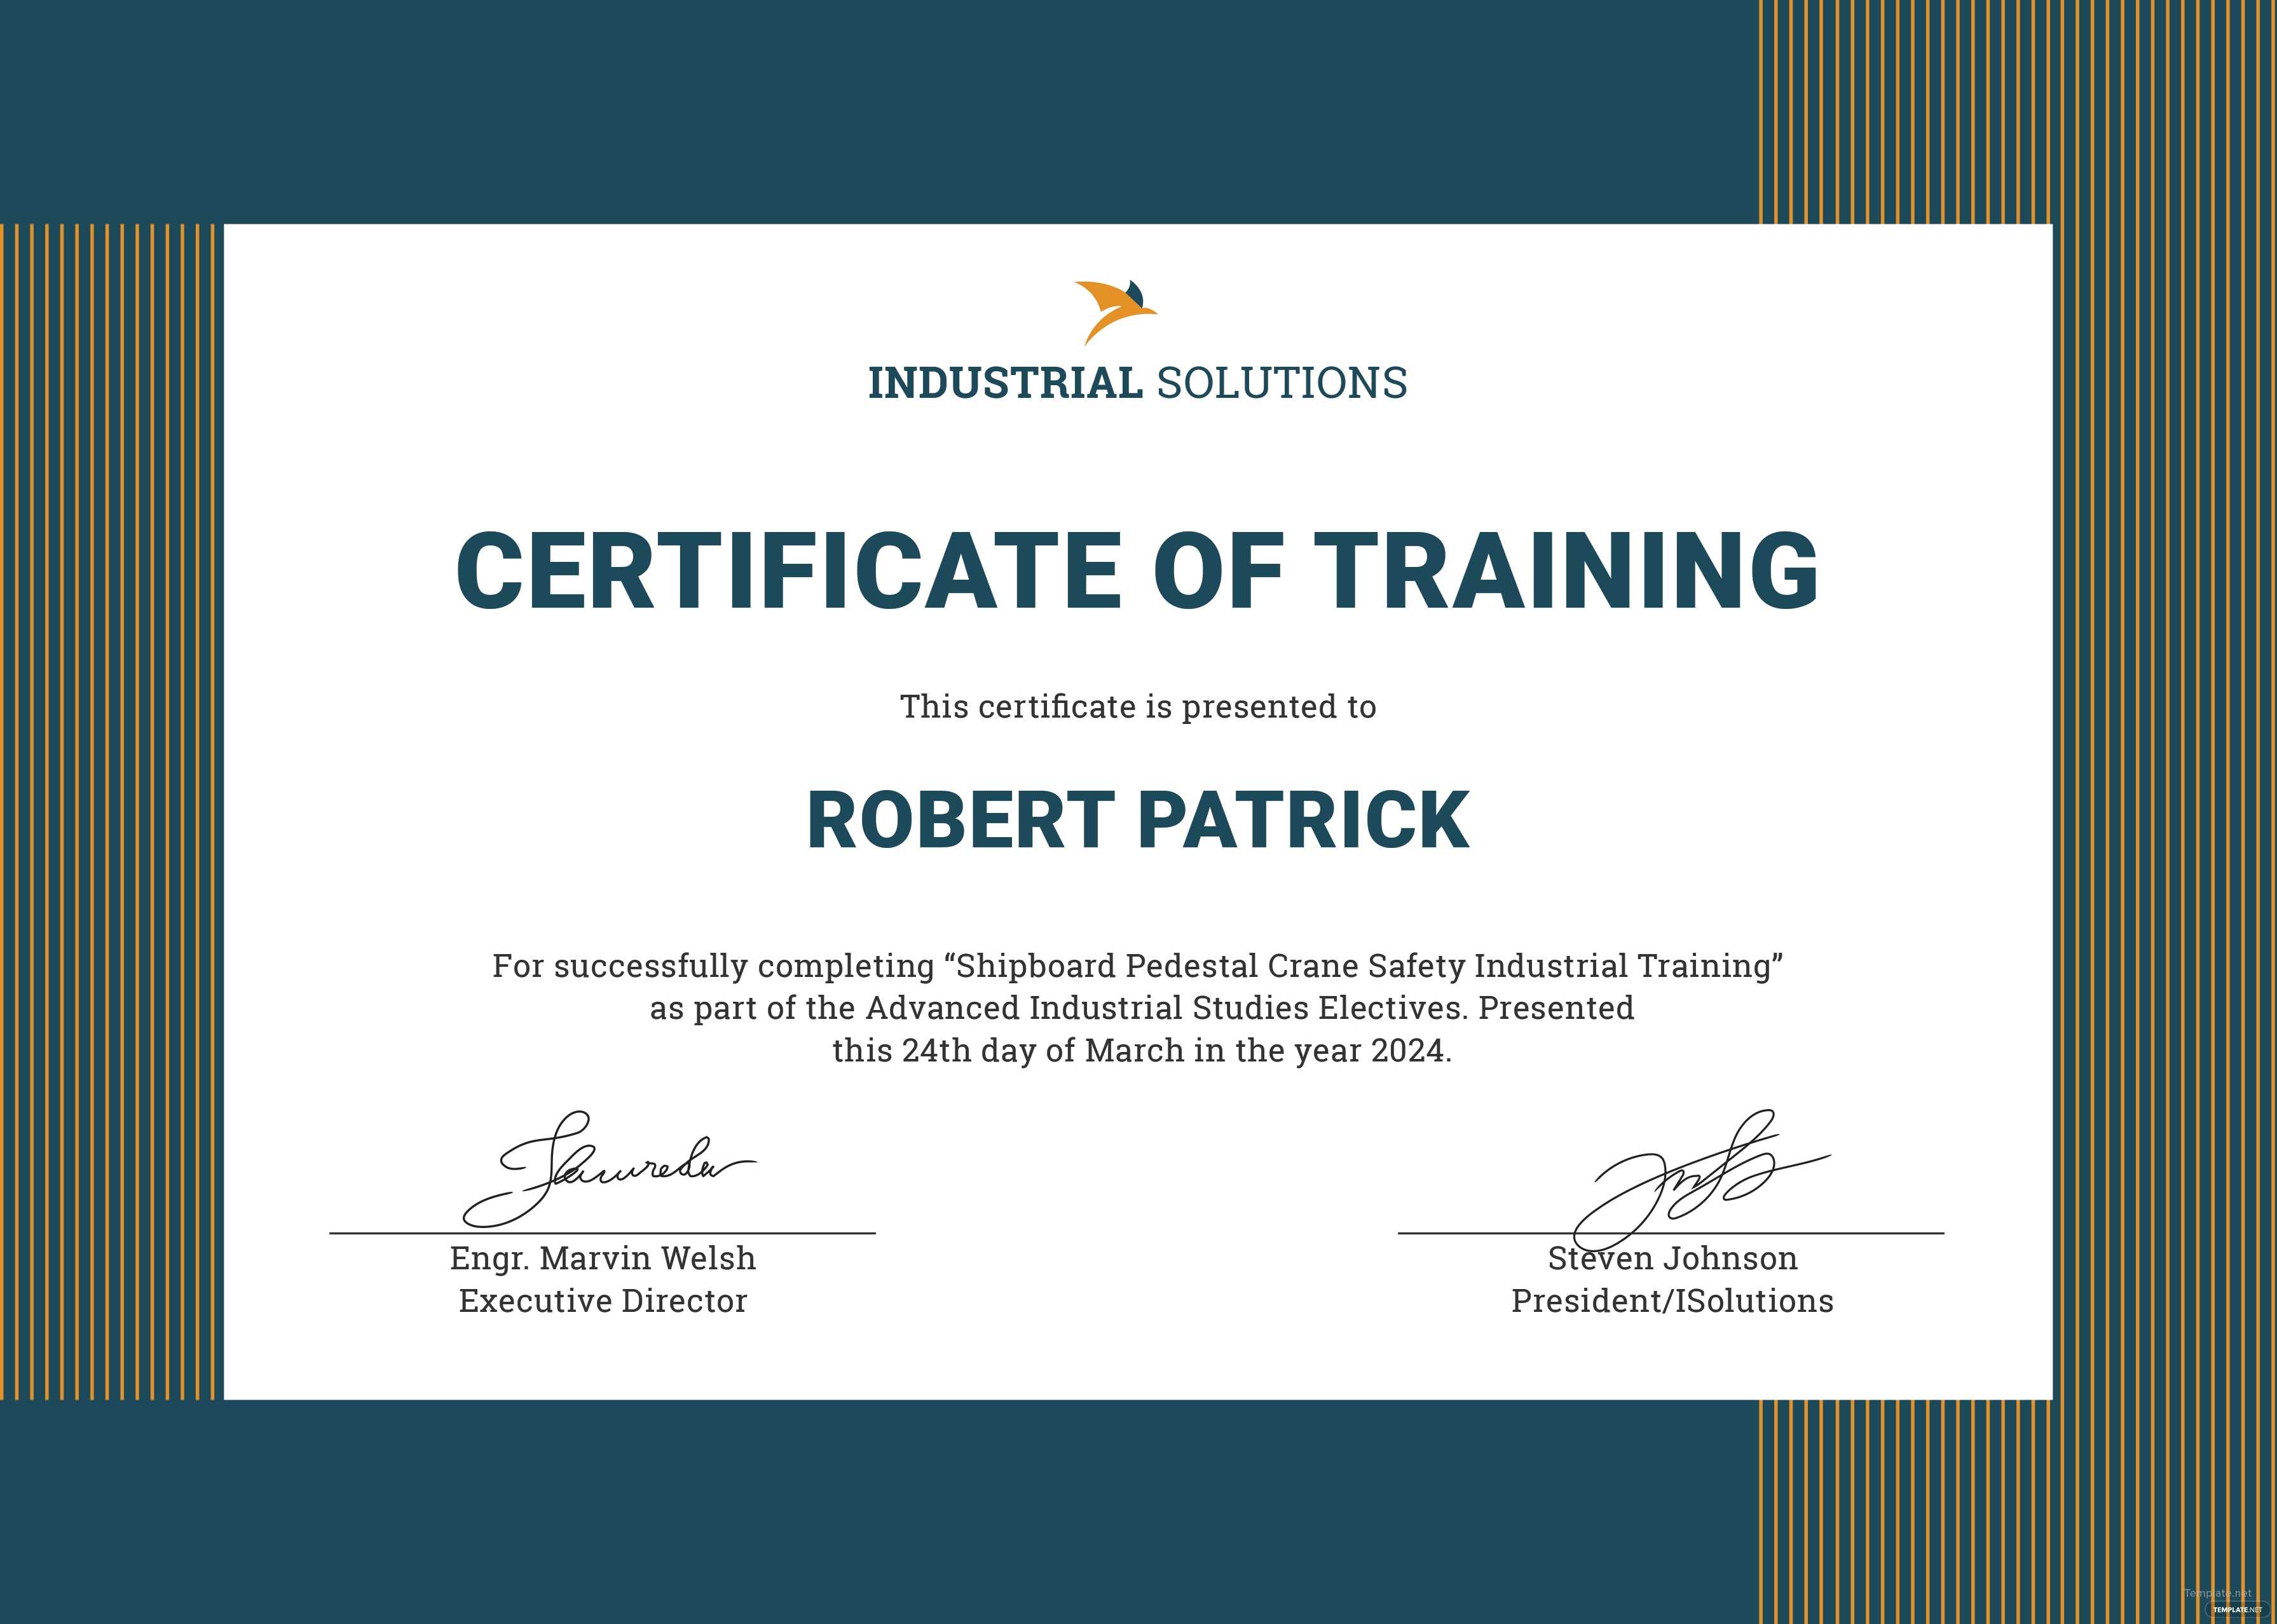 Training Certificate Template Software – Qiux With Regard To Template For Training Certificate